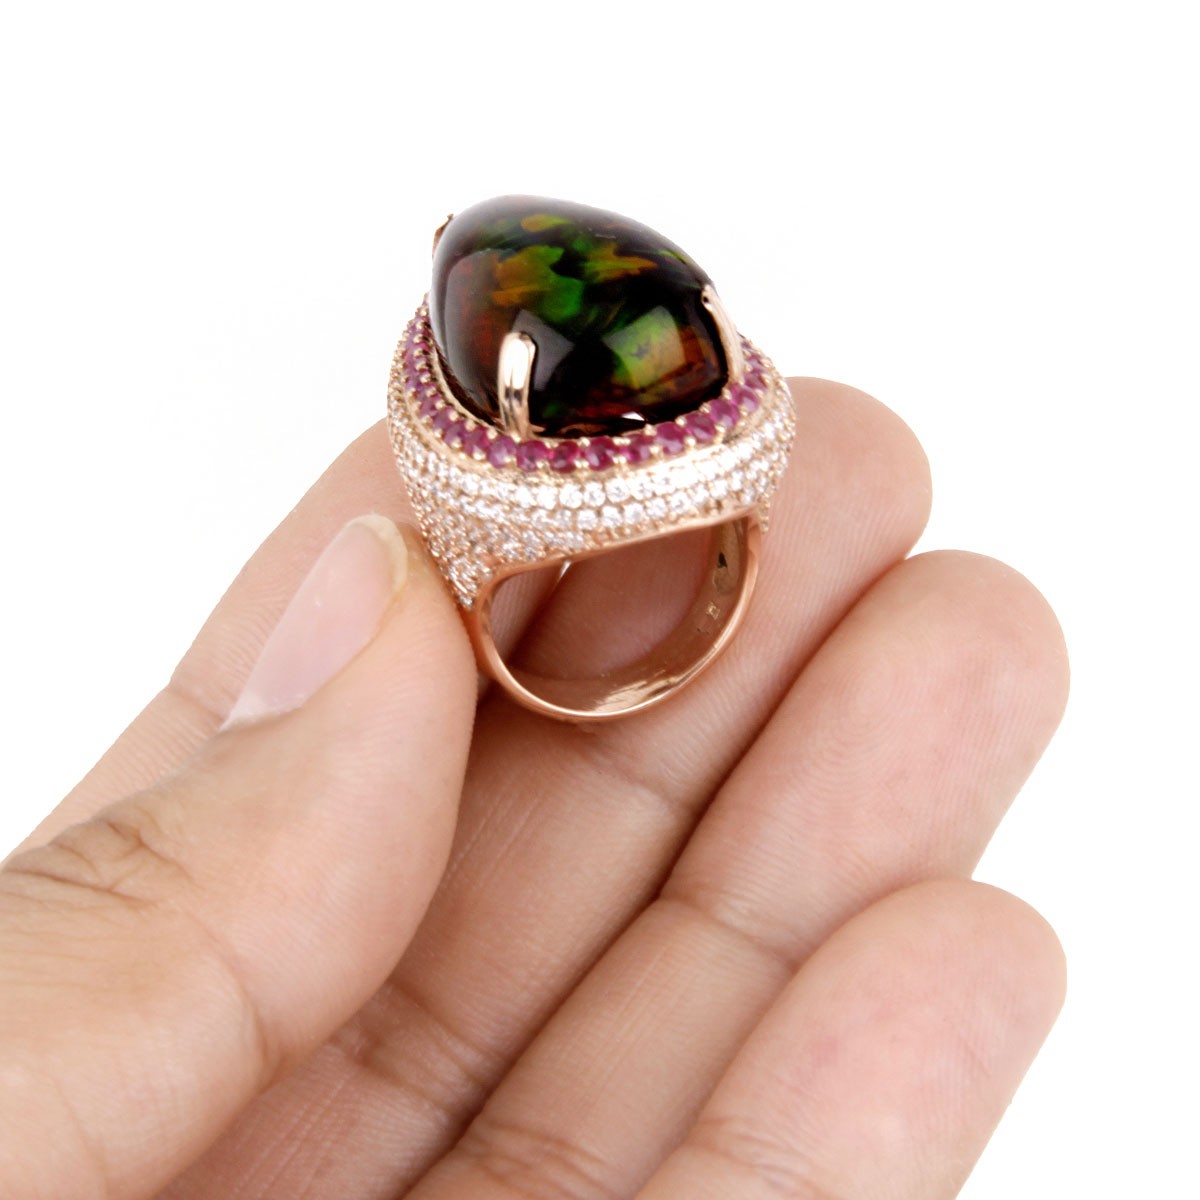 24.5 Carat Black Opal Ring